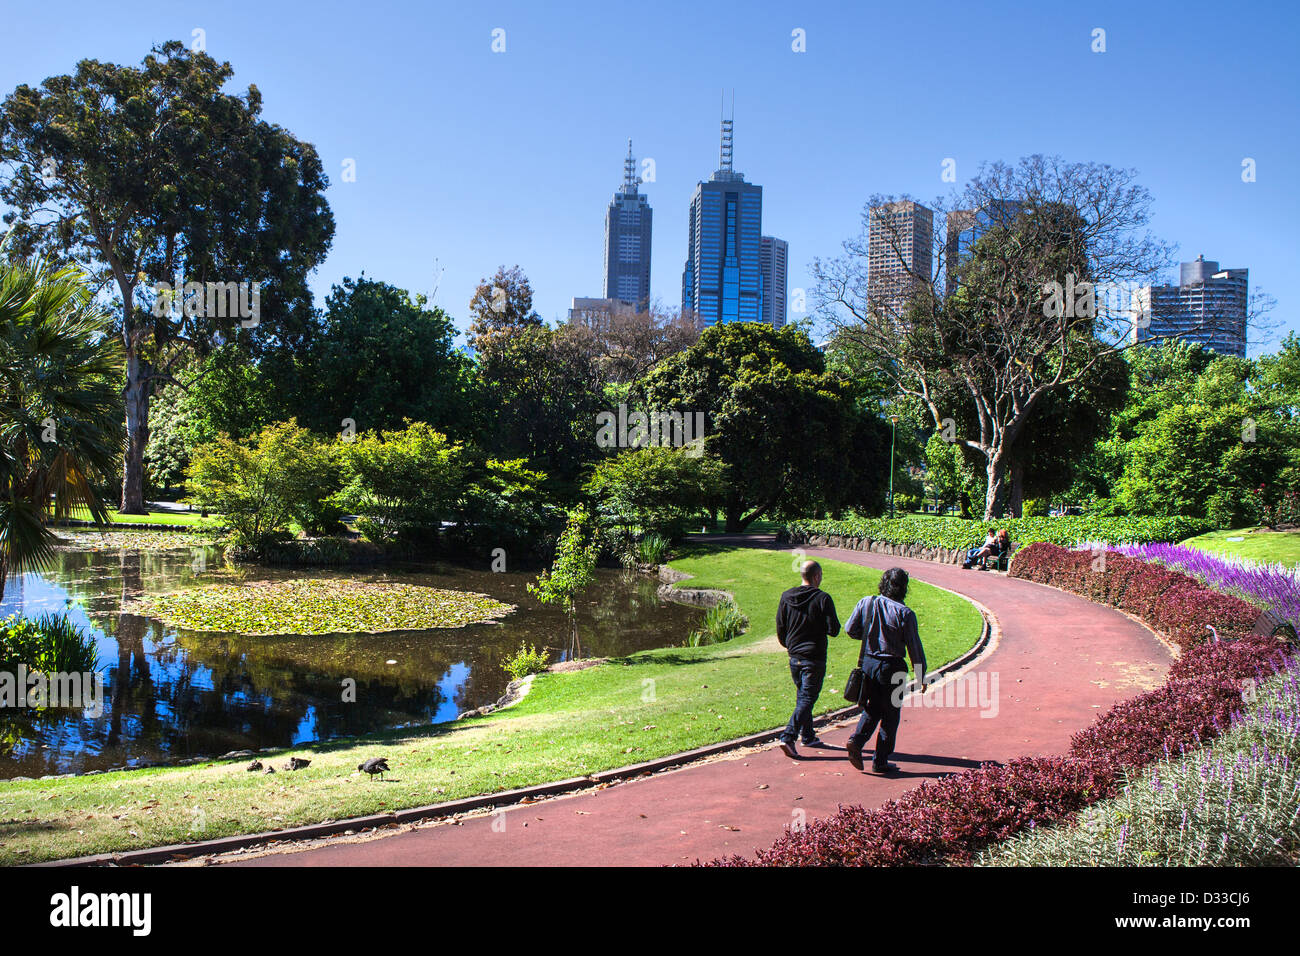 Melbourne Gardens Park rose gardens in Kings domain Victoria Australia. Australian people walking in parks to the city skyline. Stock Photo